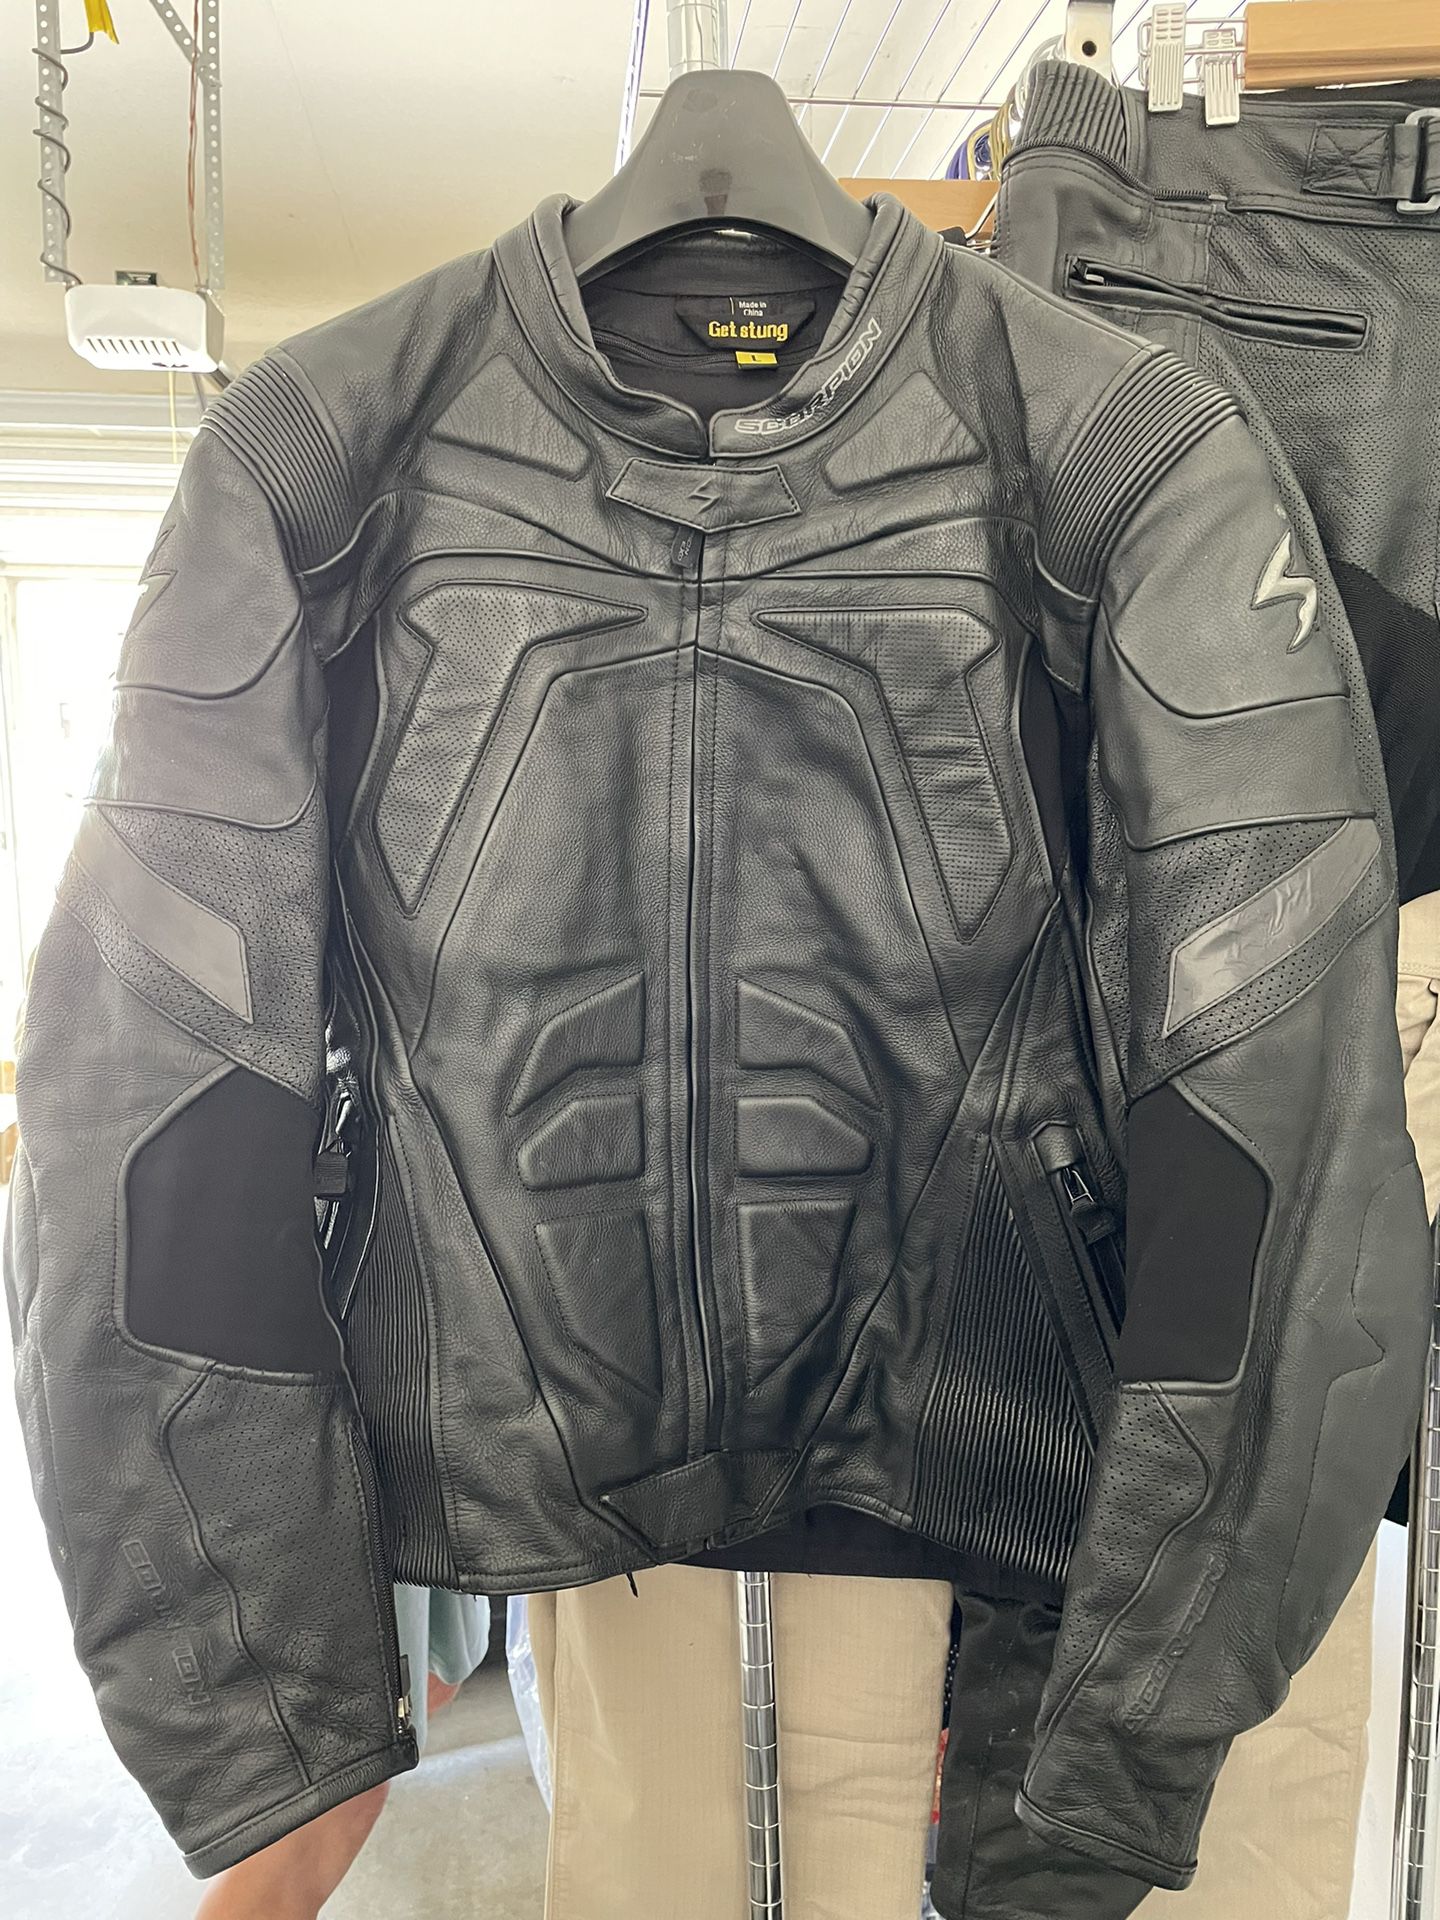 Scorpion Exo Skeletal Protection Motorcycle Leather Jacket 